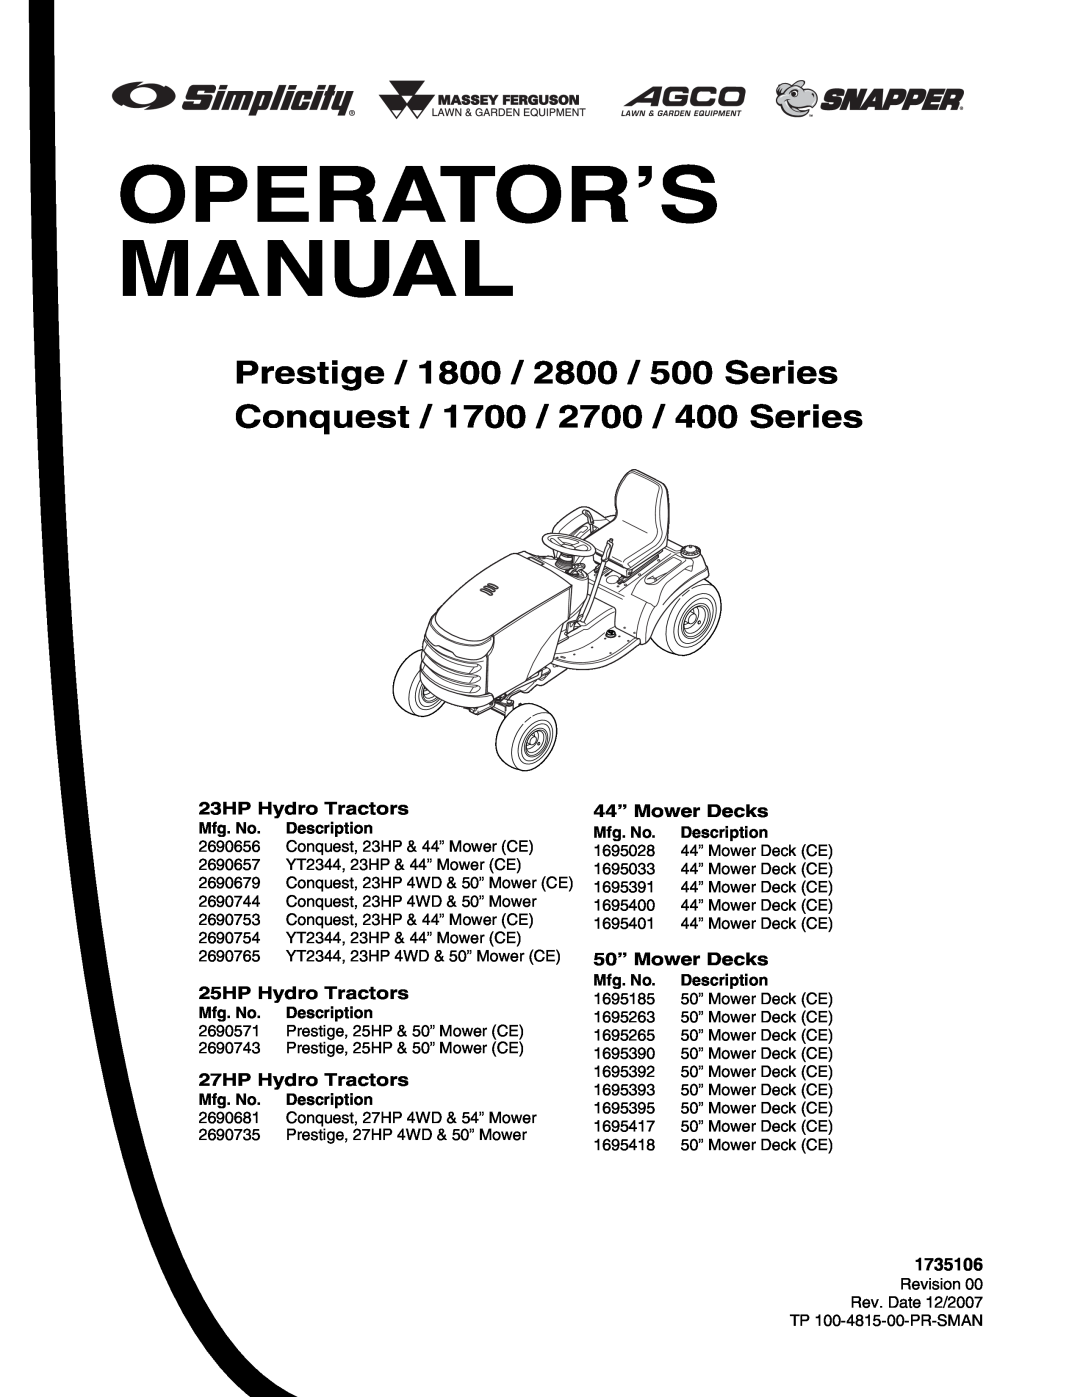 Snapper 1700, 2700, 400 manual Prestige / 1800 / 2800 / 500 Series, Conquest / 1700 / 2700 / 400 Series, Operator’S Manual 